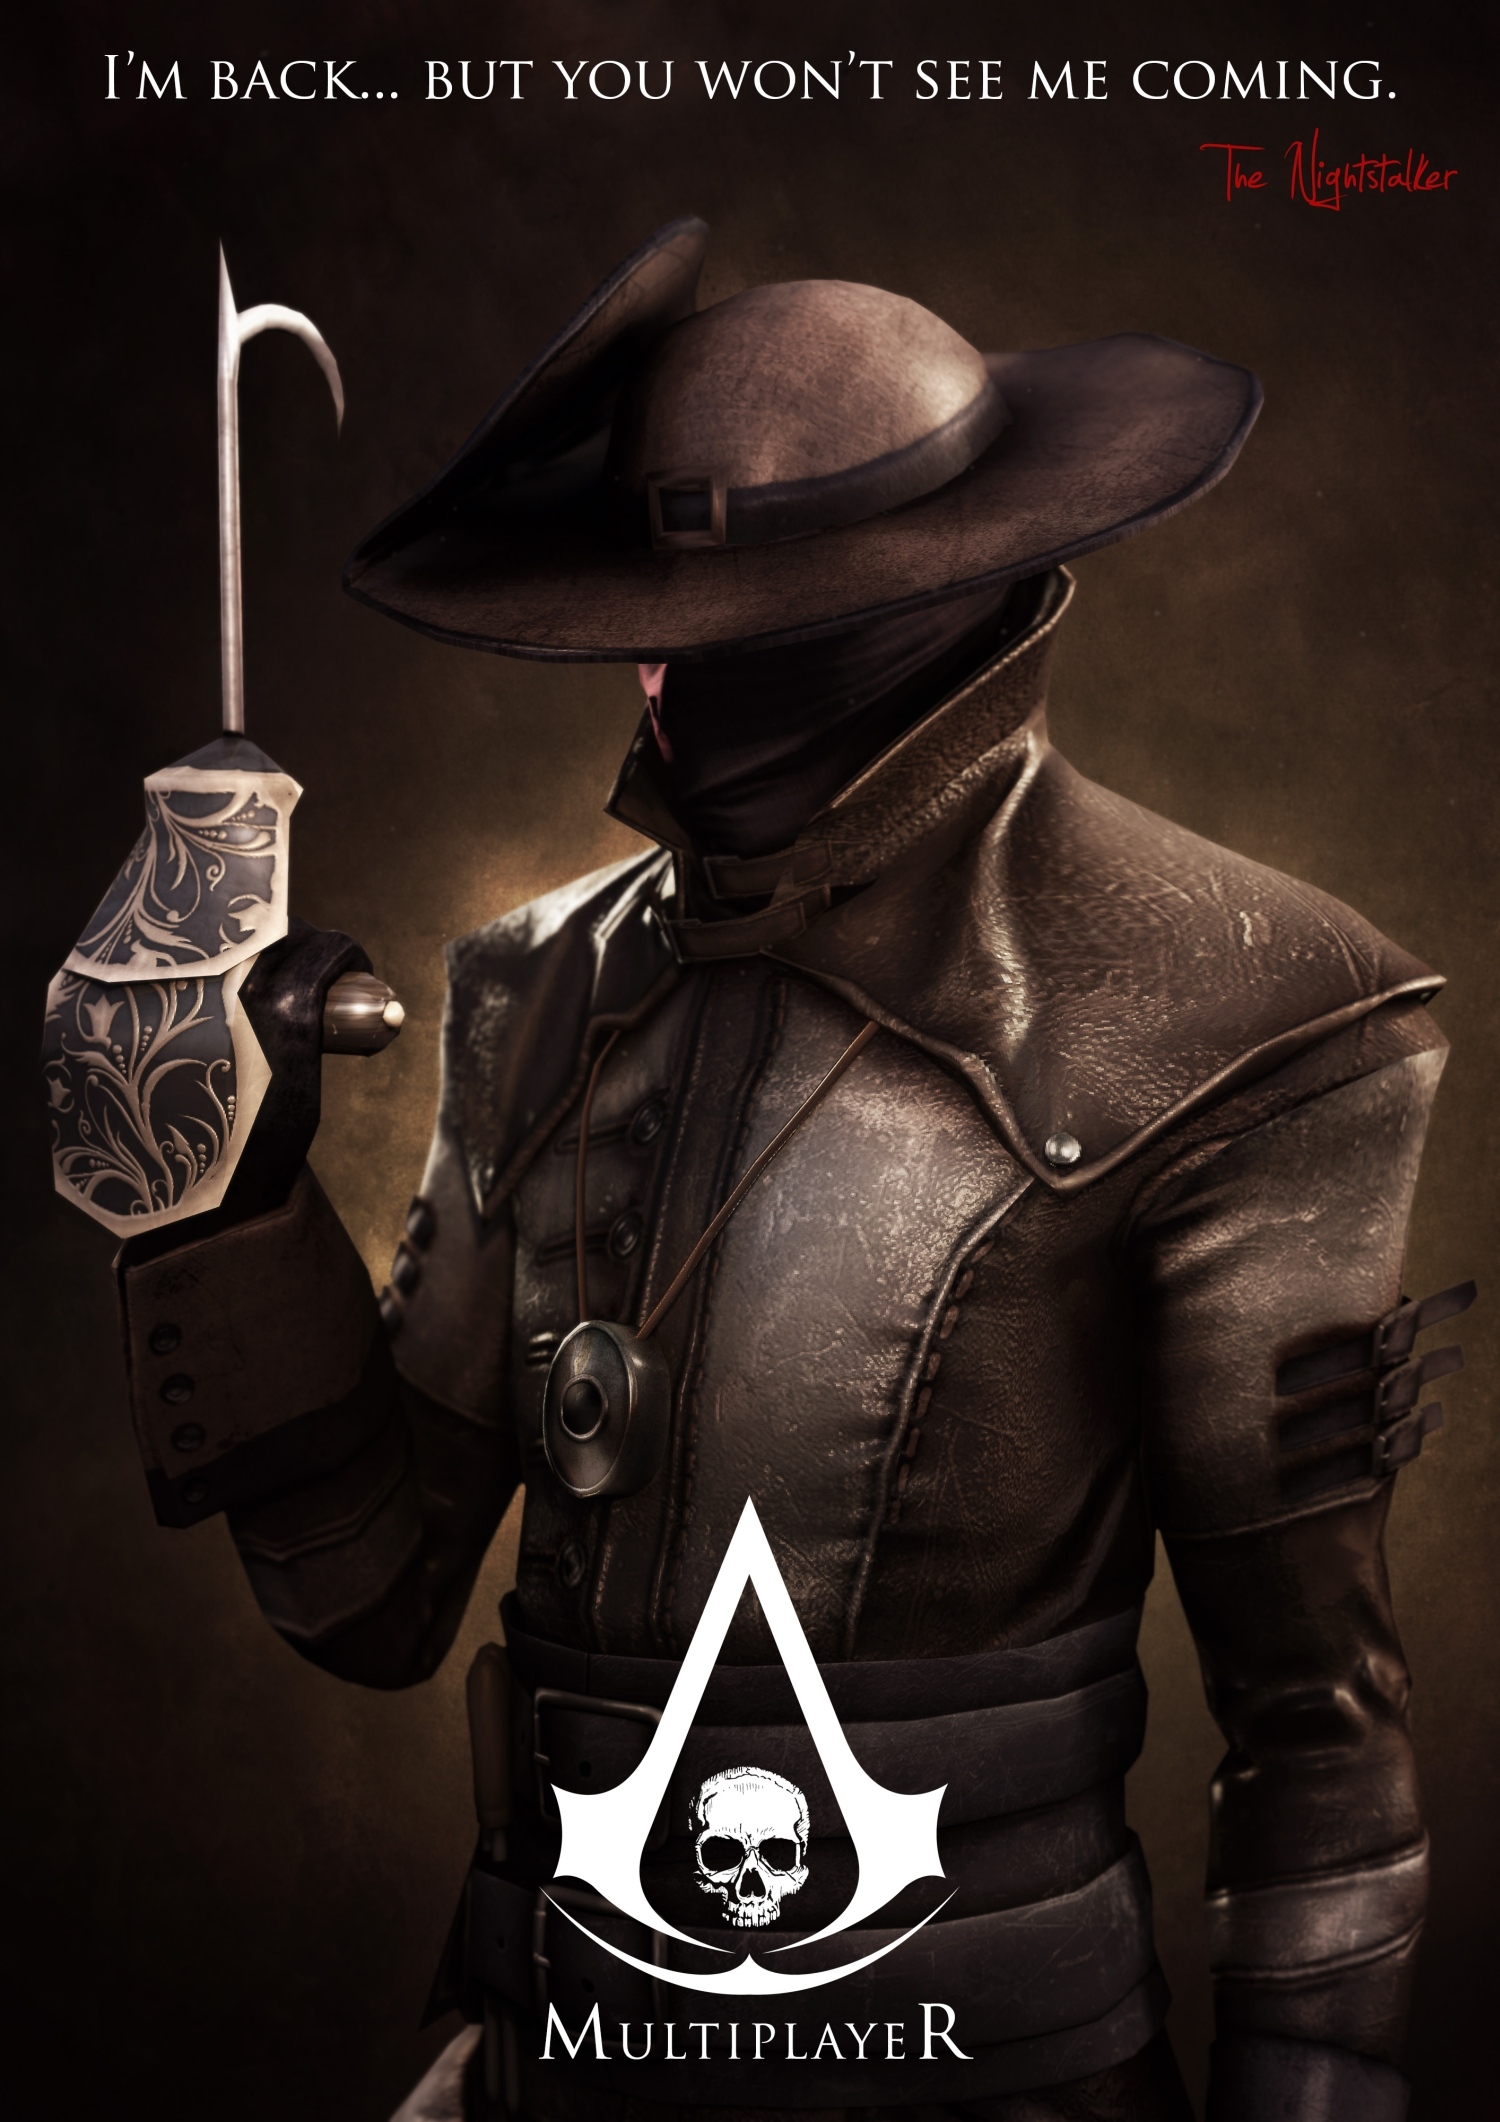 Nuevo Material De Assassin S Creed Iv Black Flag Borntoplay Blog De